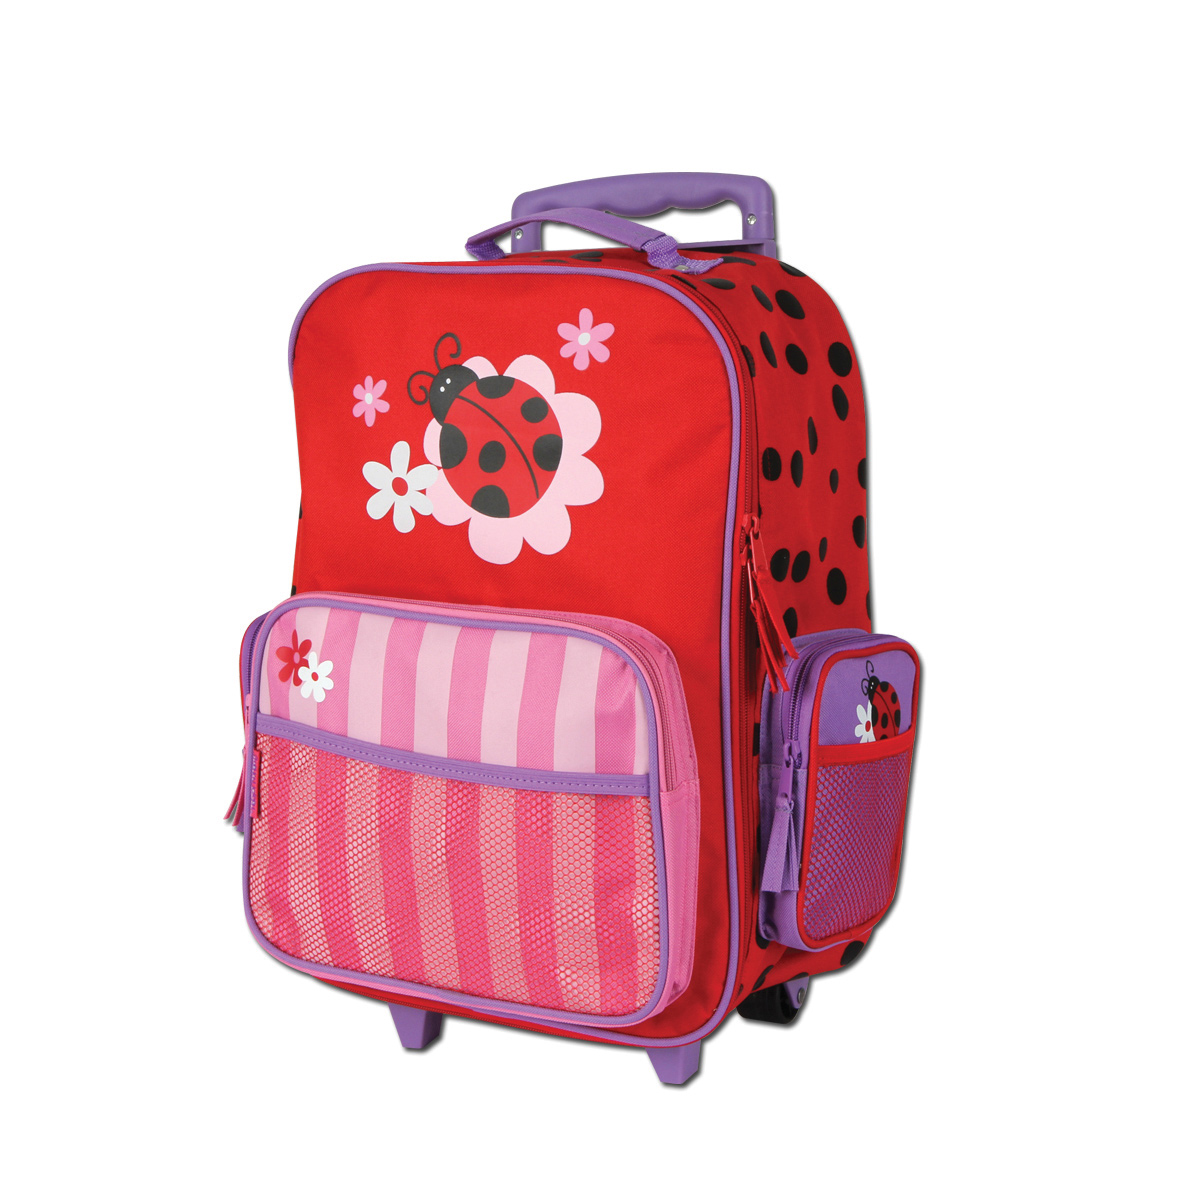 Rolling Luggage - Ladybug